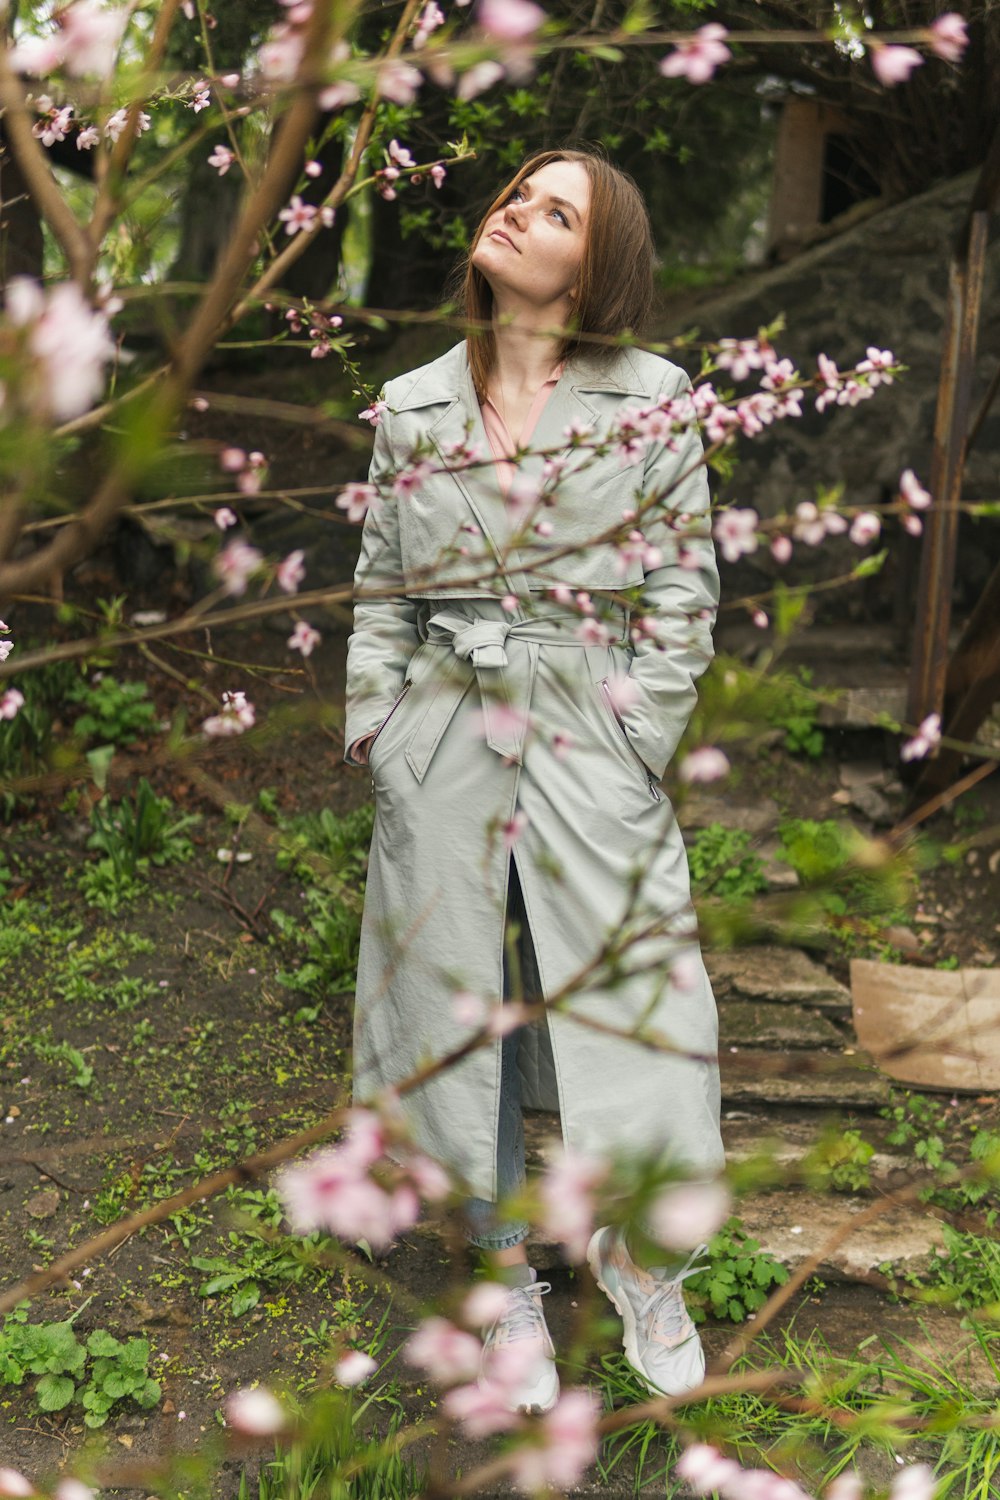 woman in white long sleeve dress standing near green plants